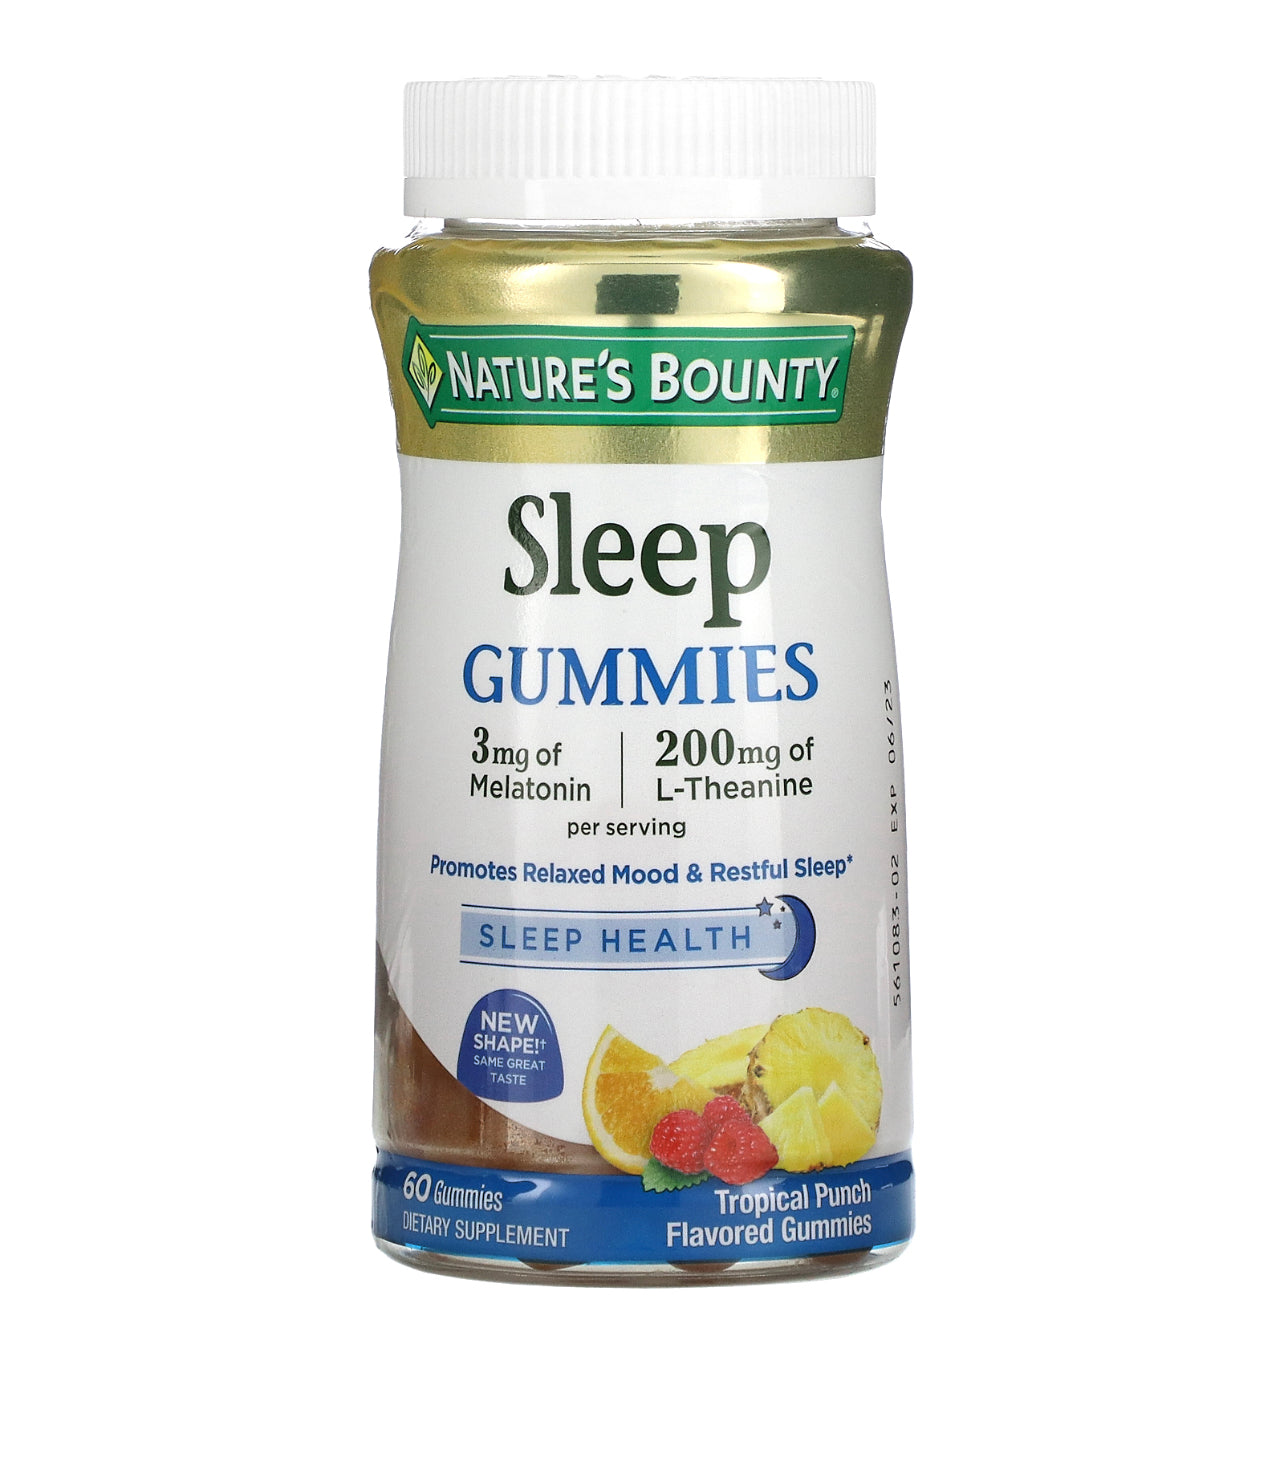 Sleep gummies